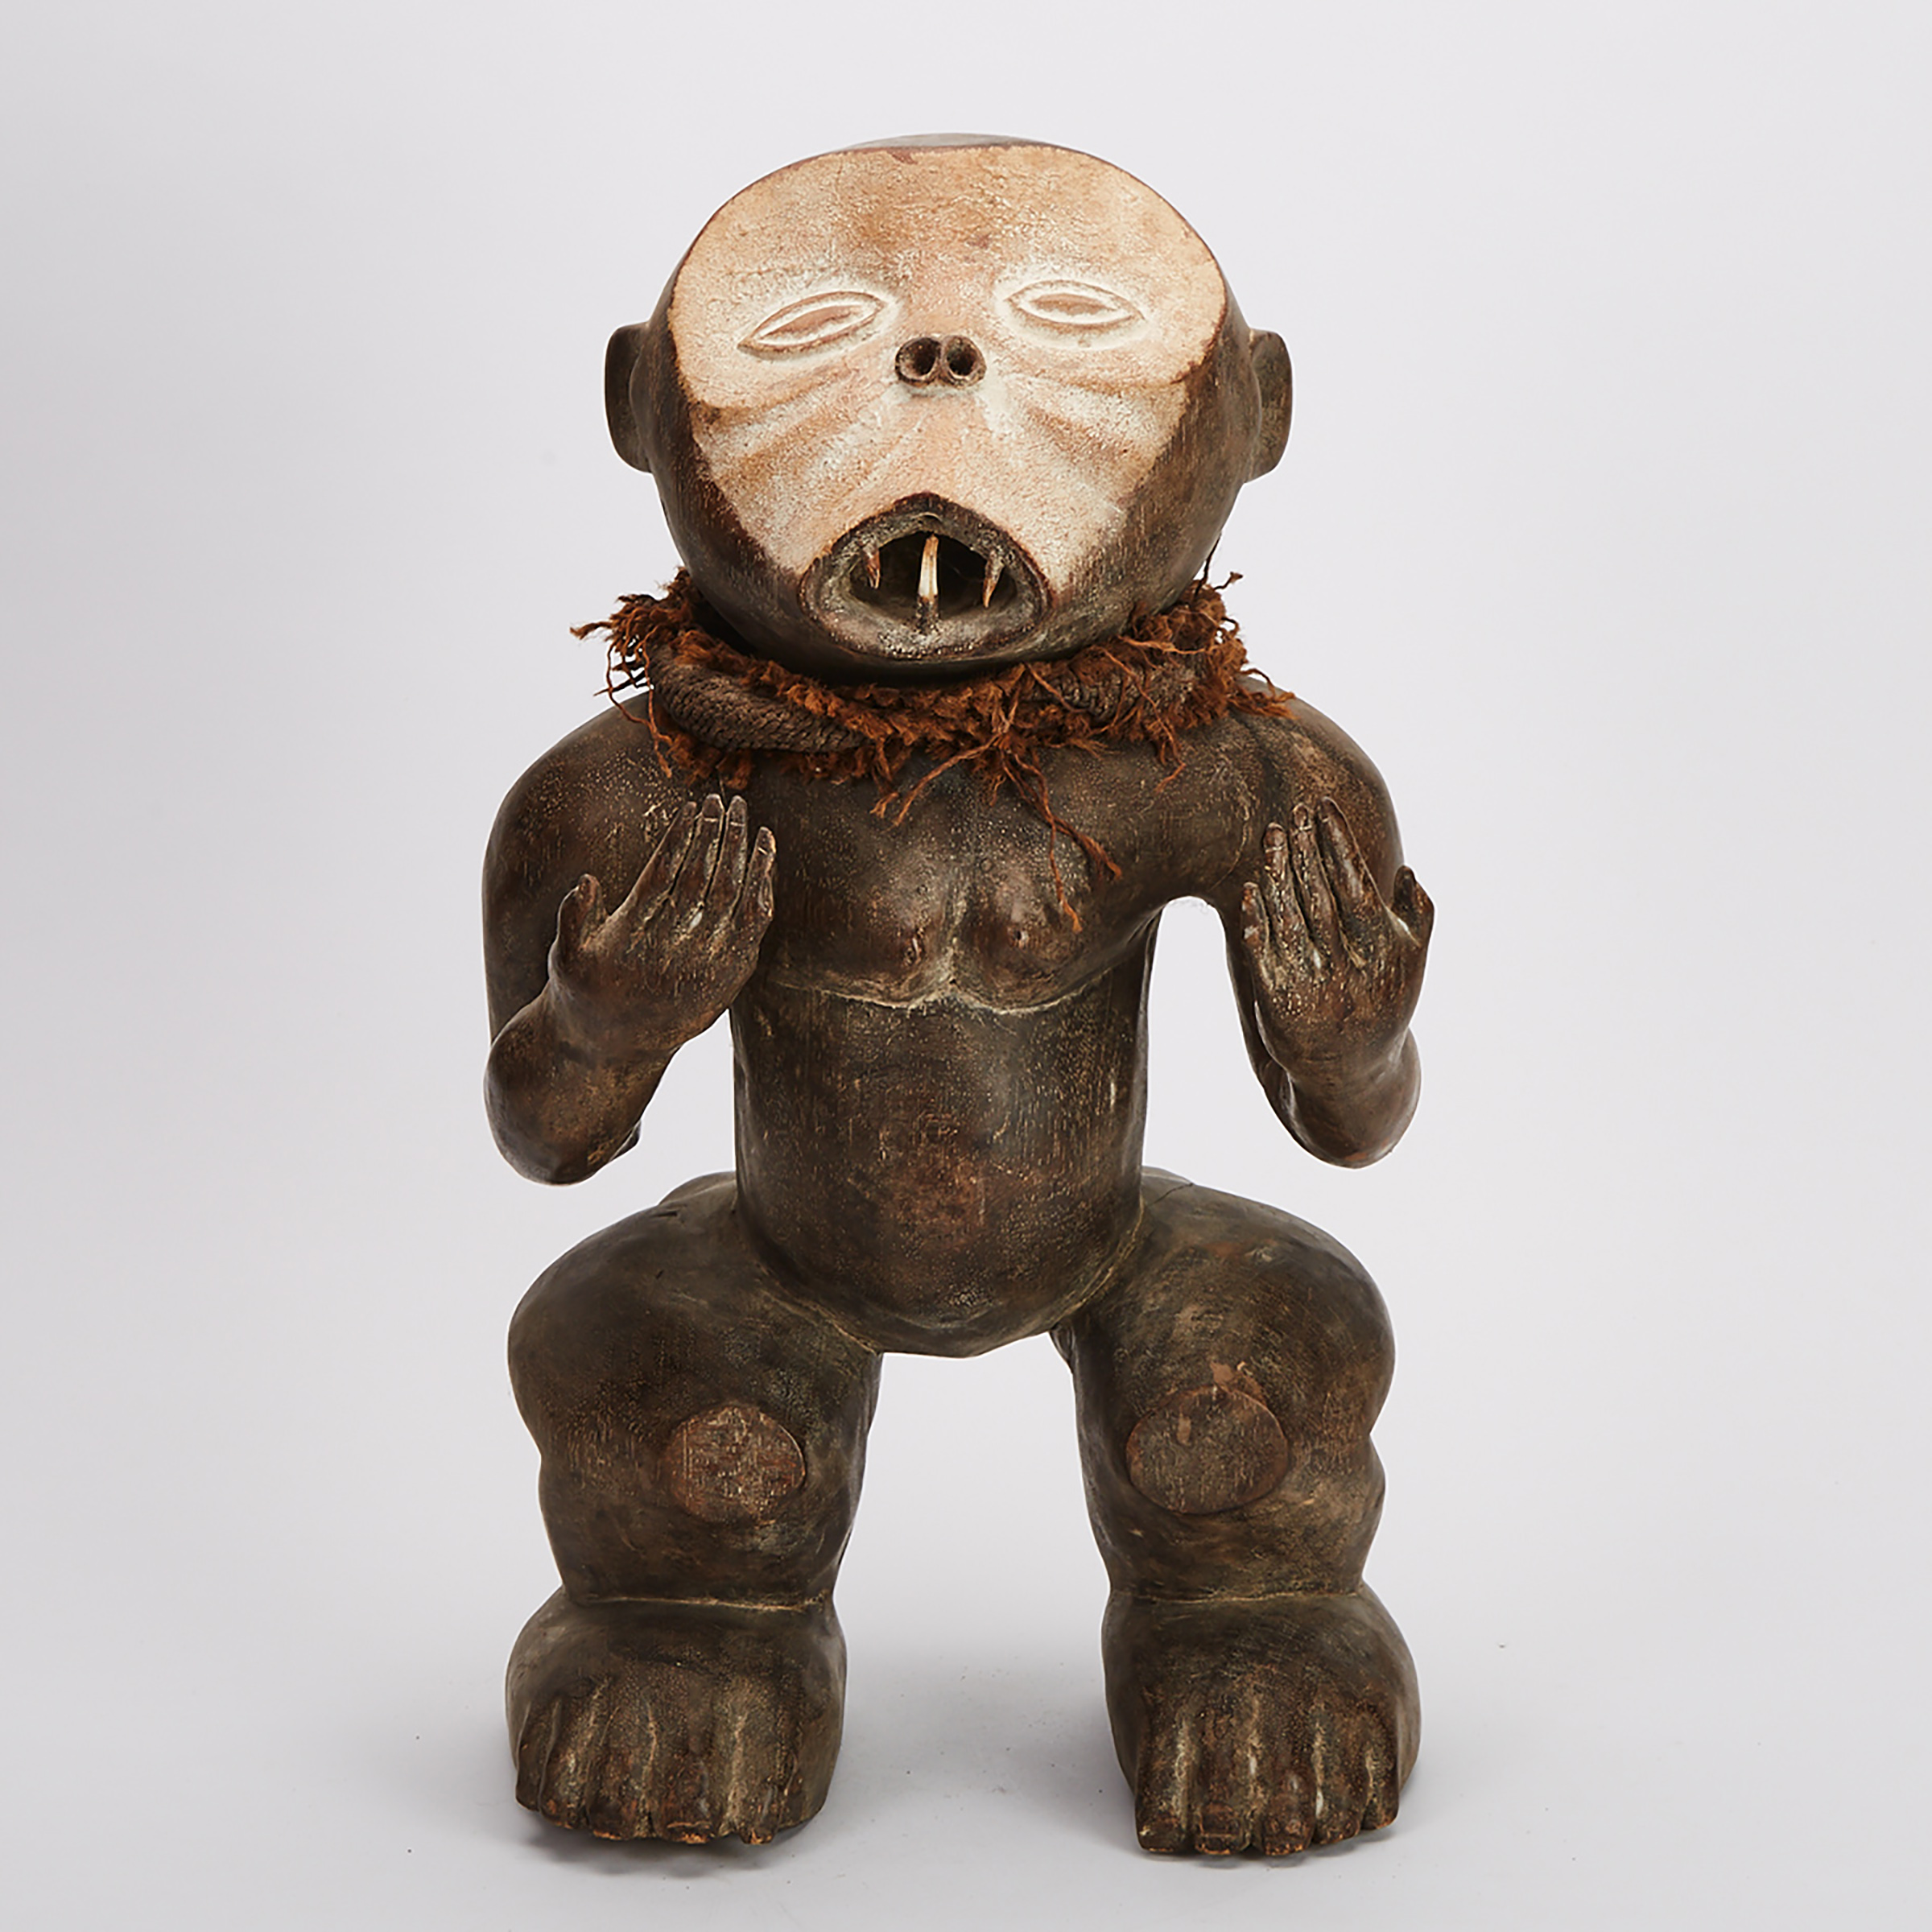 Monkey Figure, possibly Lega, Democratic Republic of Congo, Central Africa